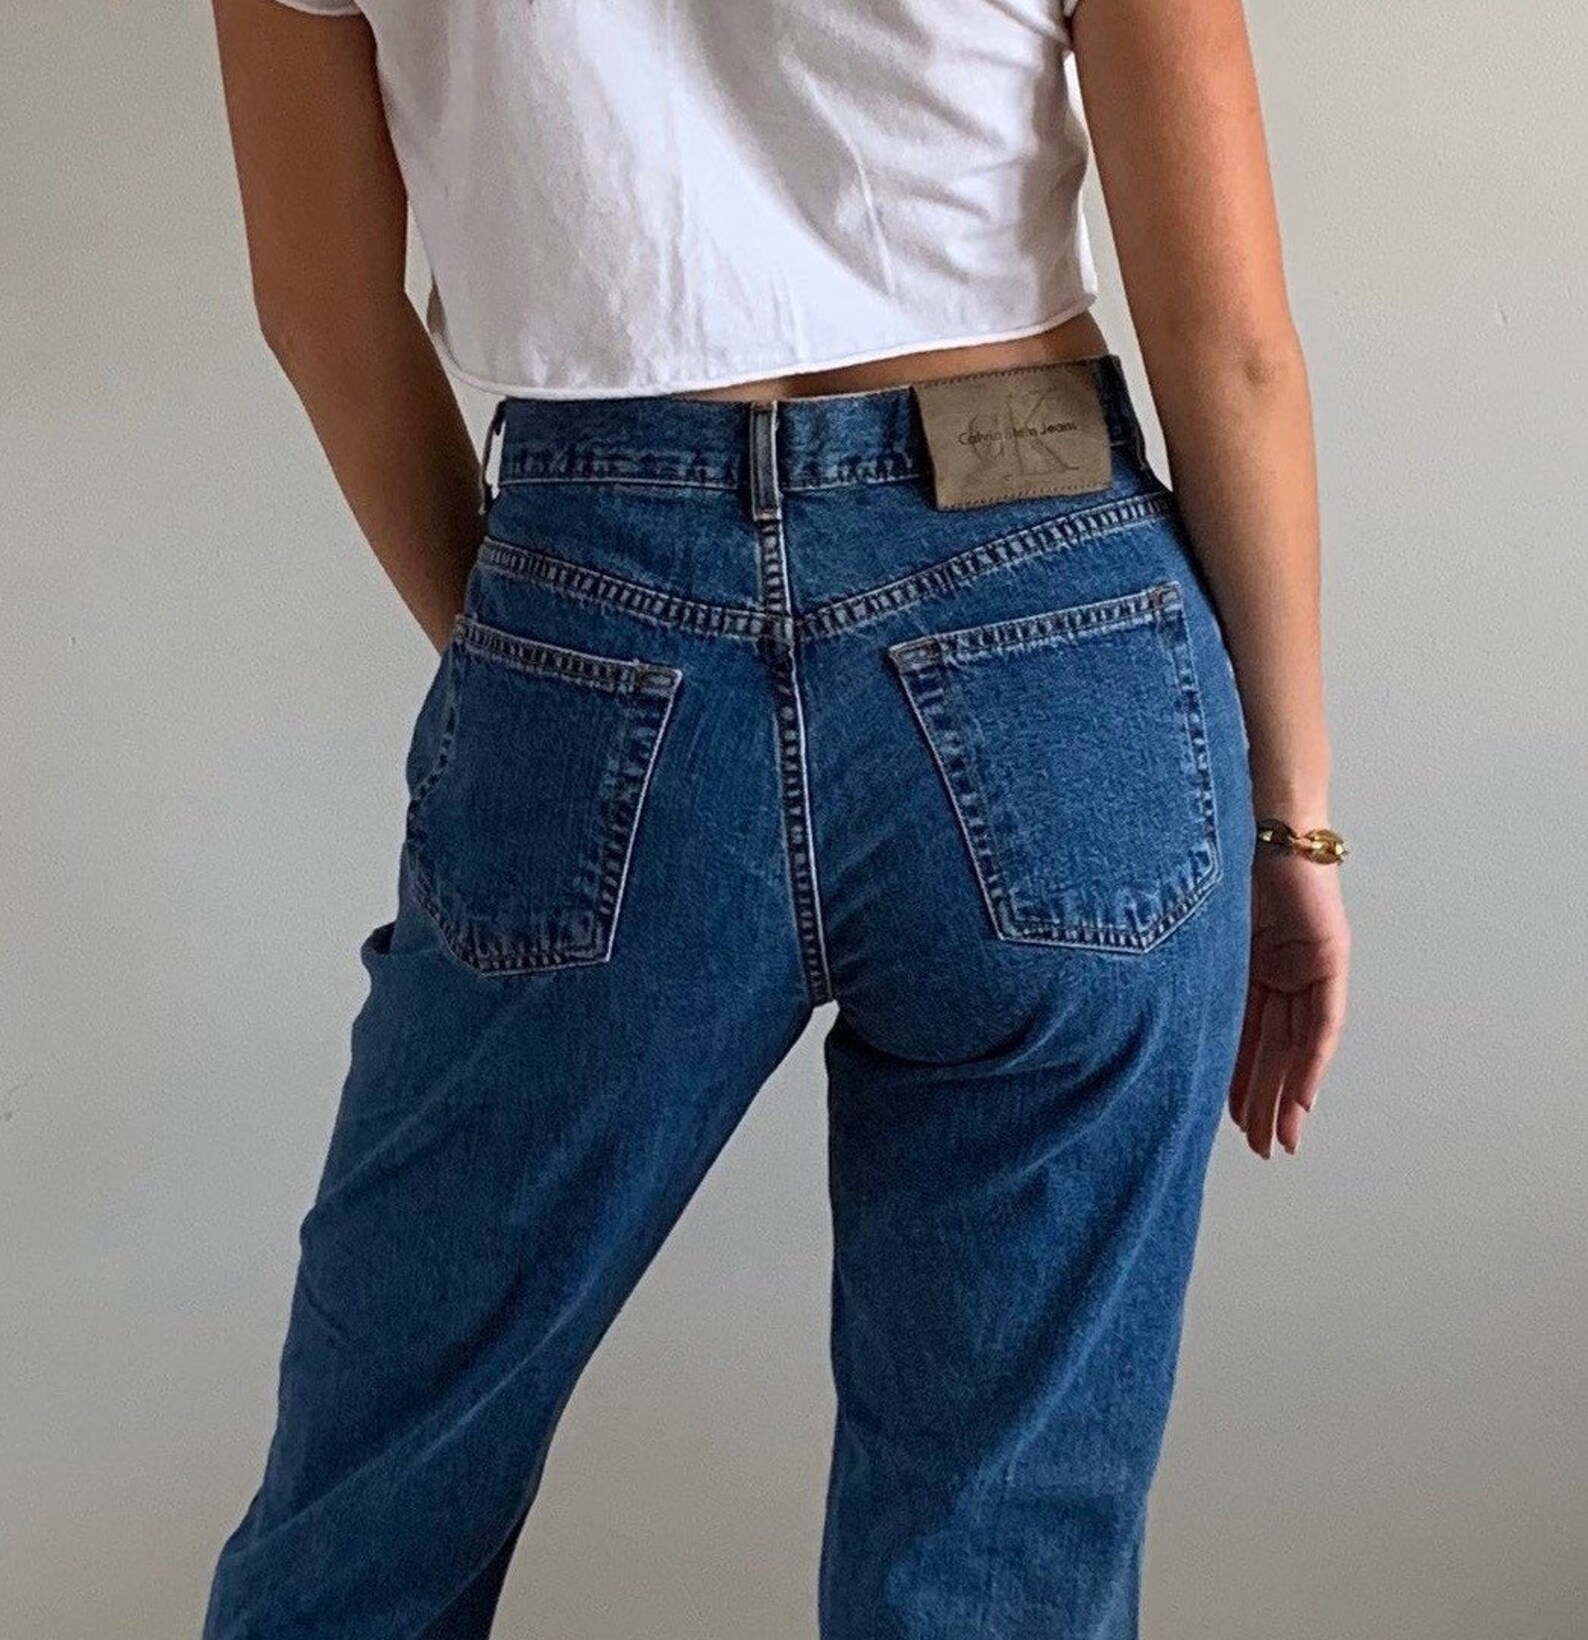 90s Calvin Klein jeans / vintage CK Calvin Klein button fly | Etsy